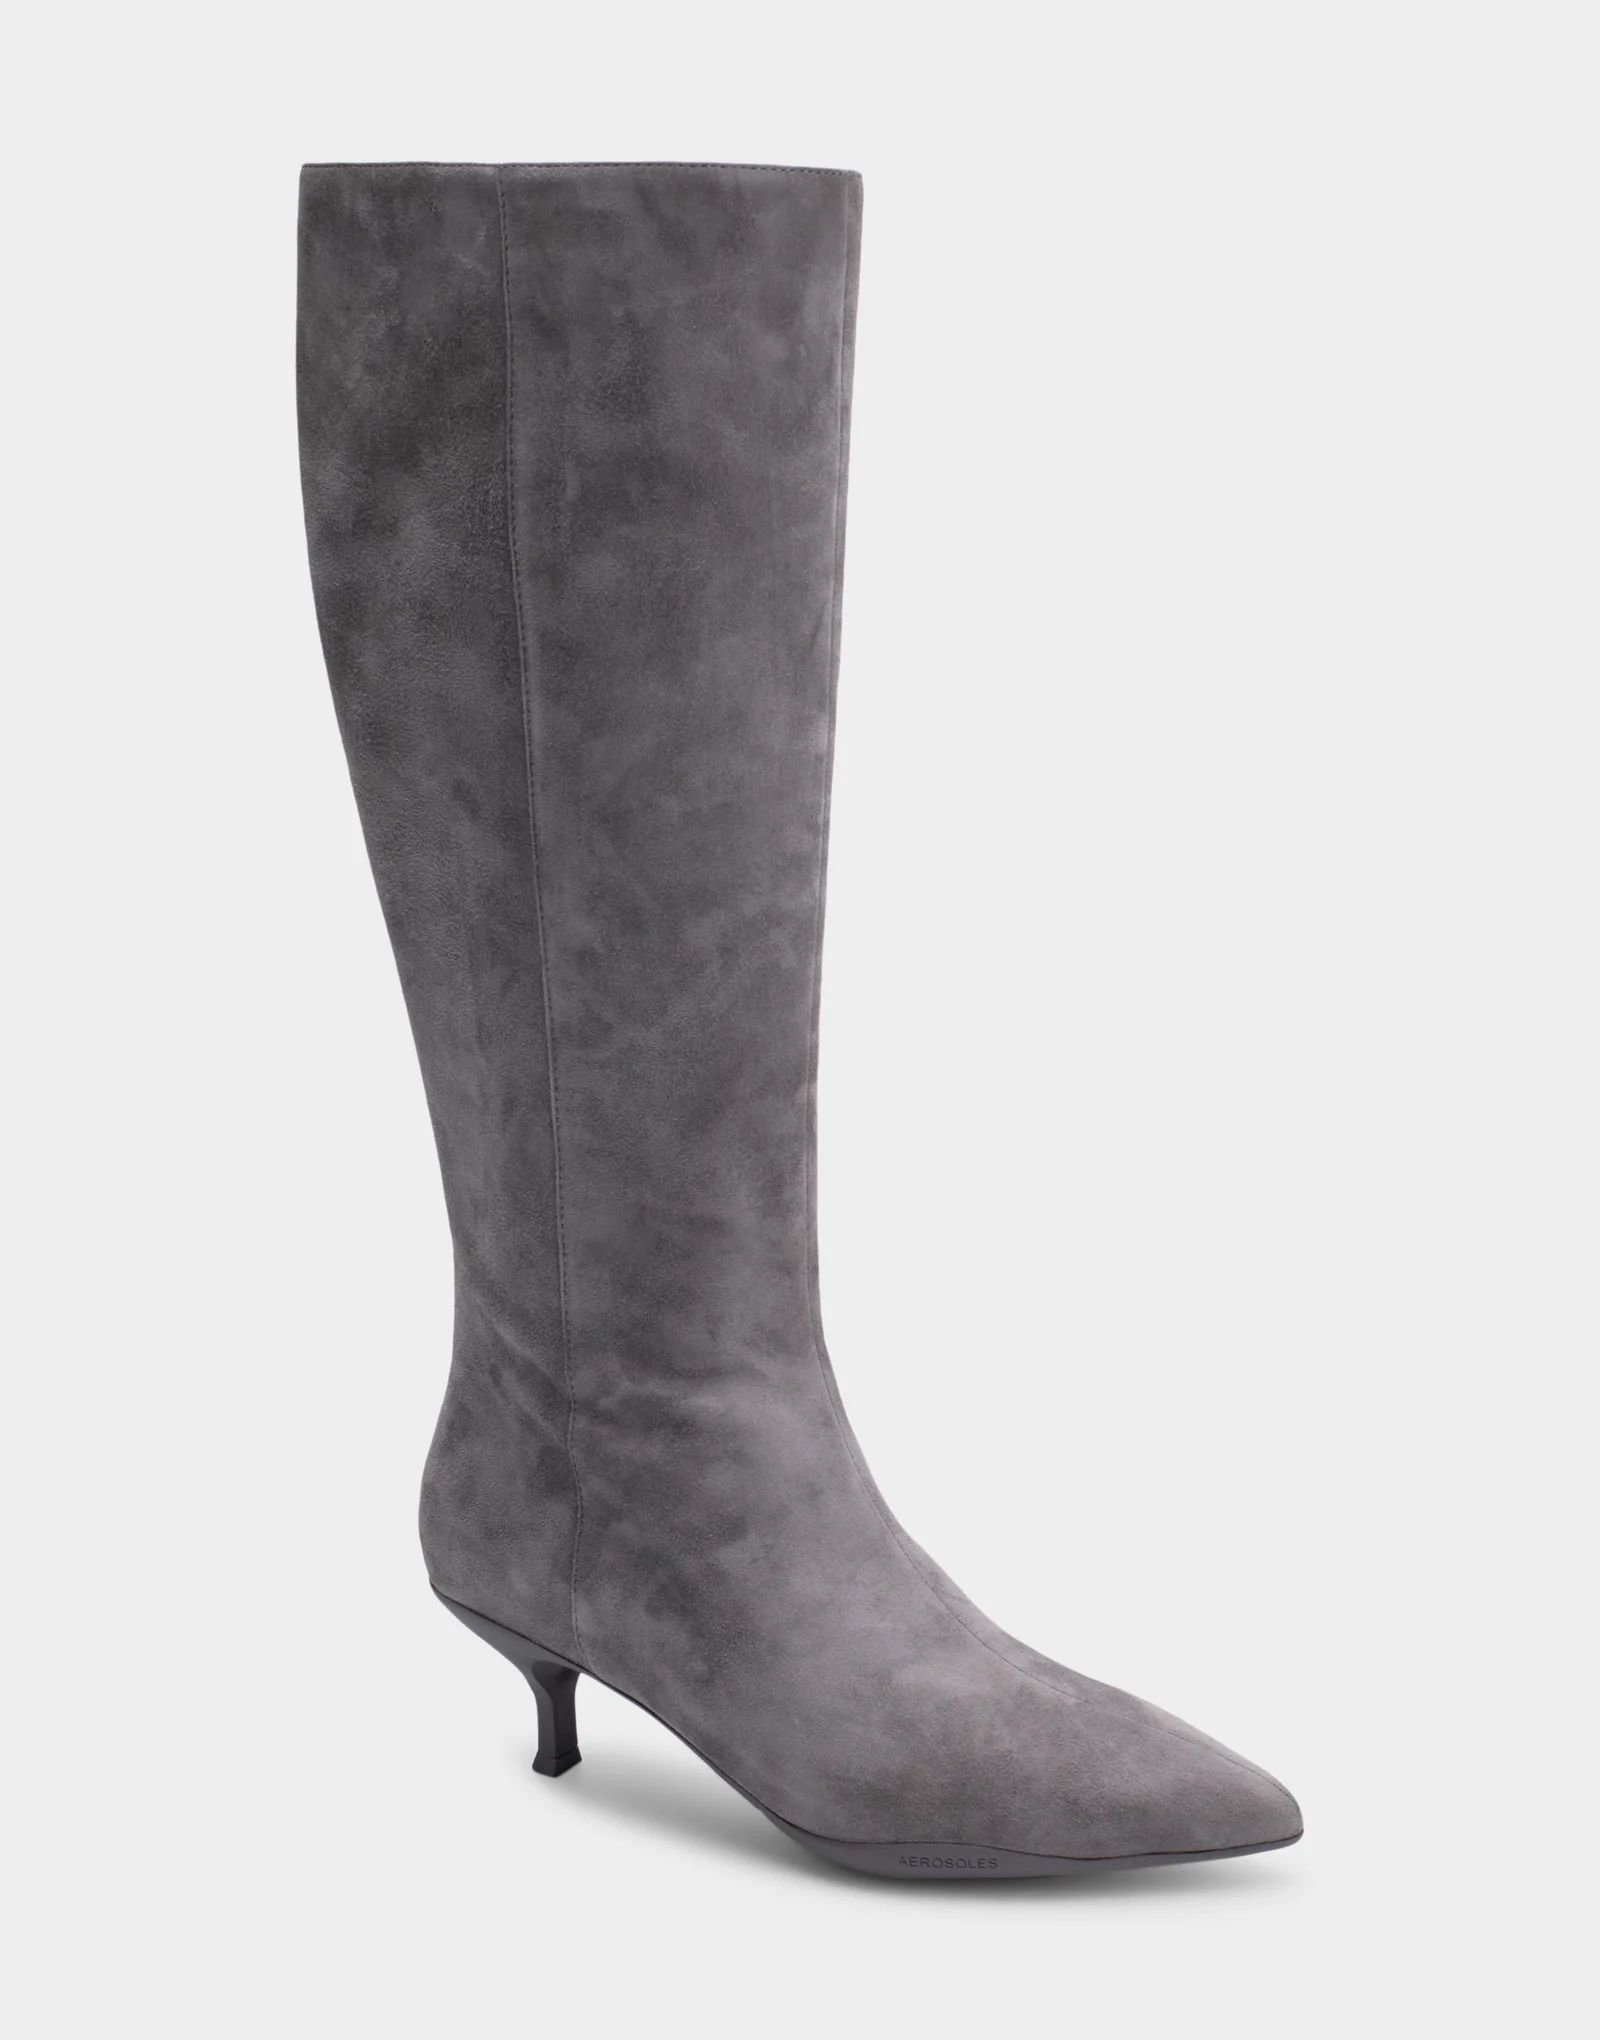 Women's Kitten Heel Tall Shaft Boot in Dark Grey | Aerosoles